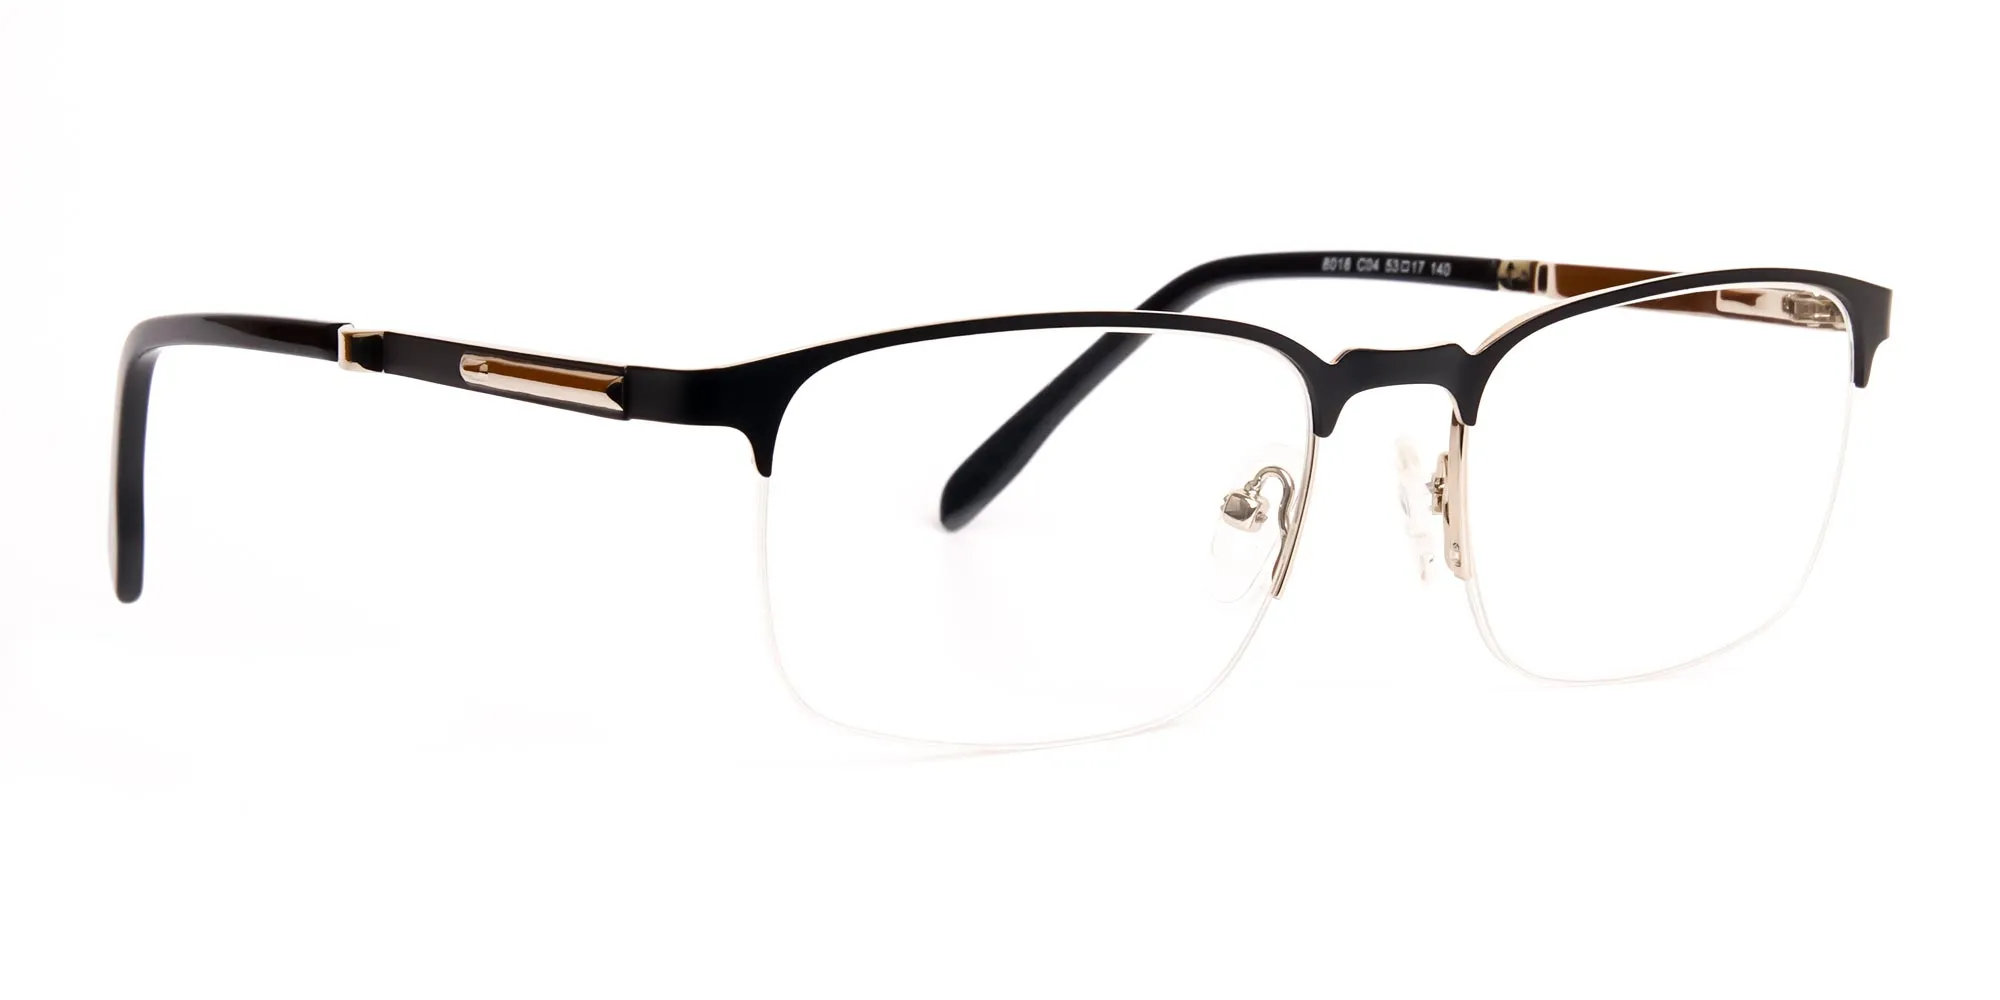 black and silver rectangular half rim glasses frames-2